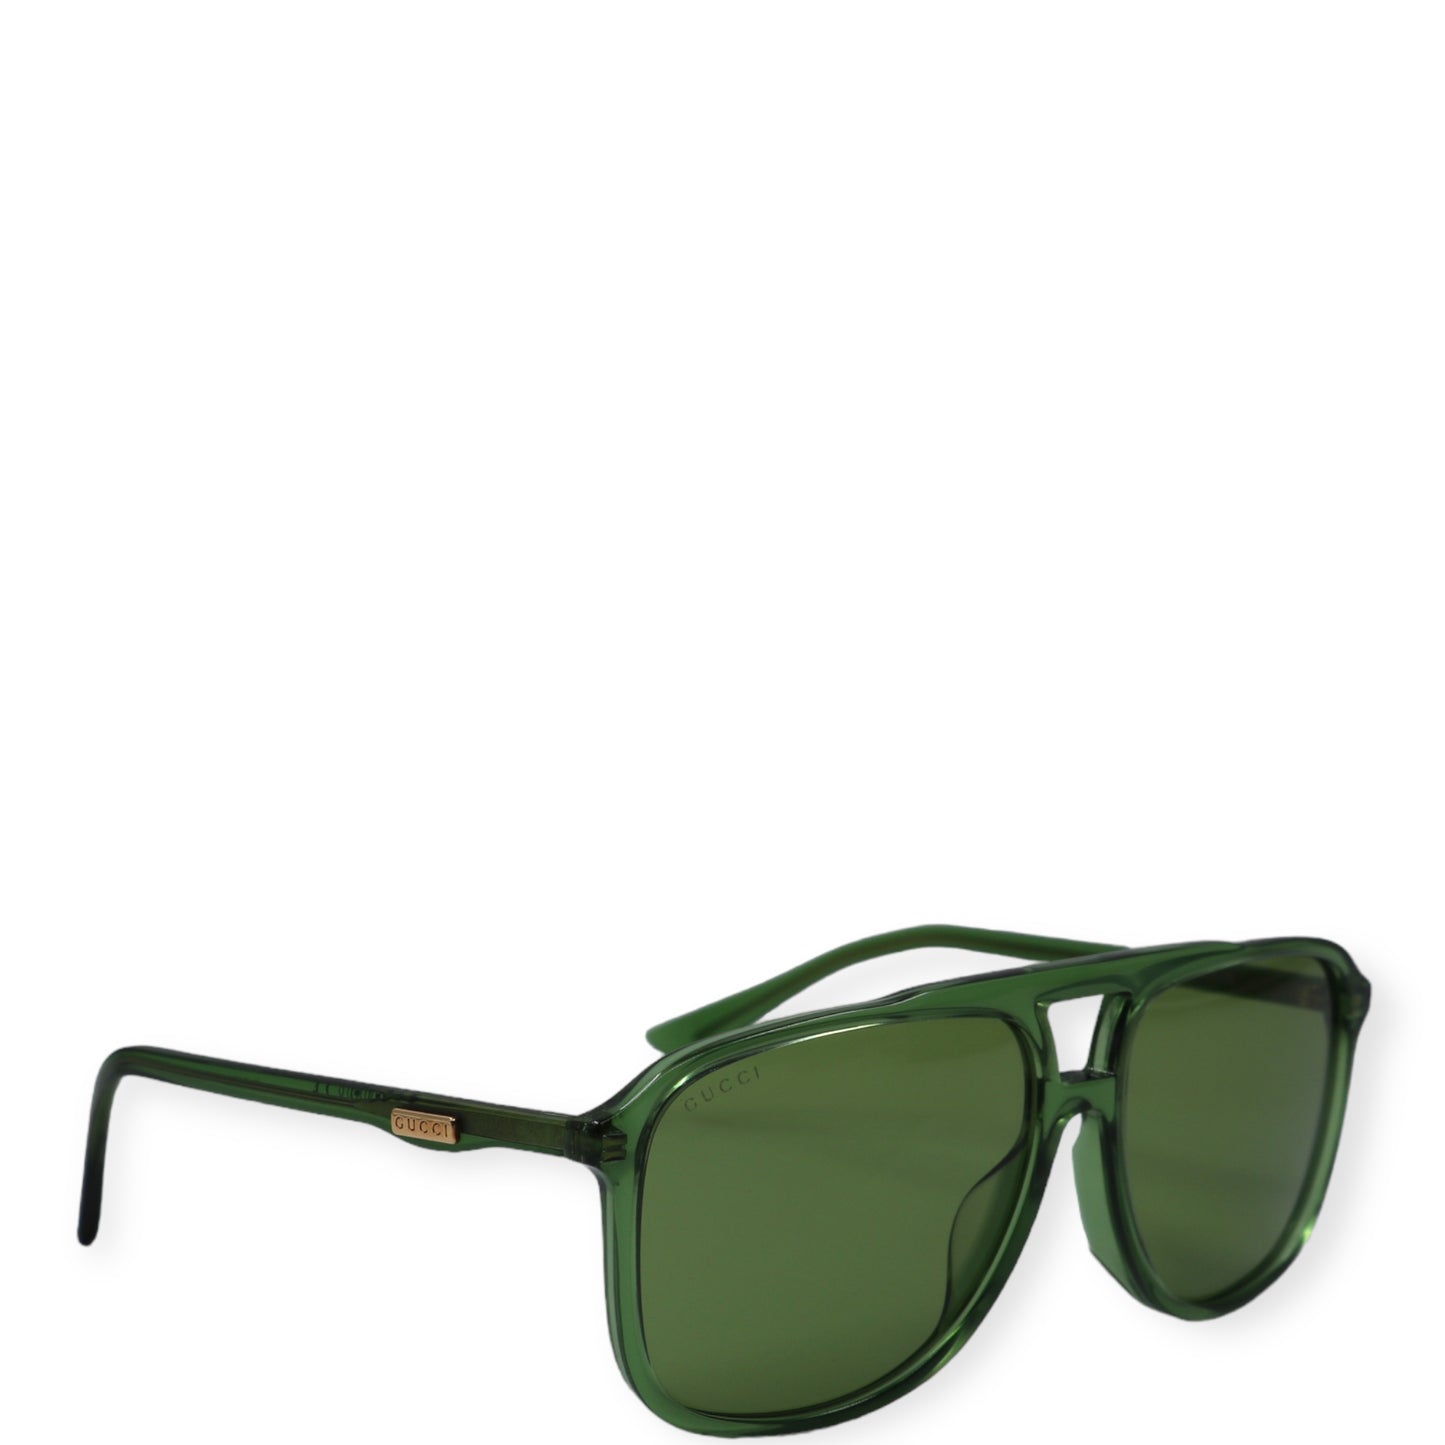 Gucci Sonnenbrille grün